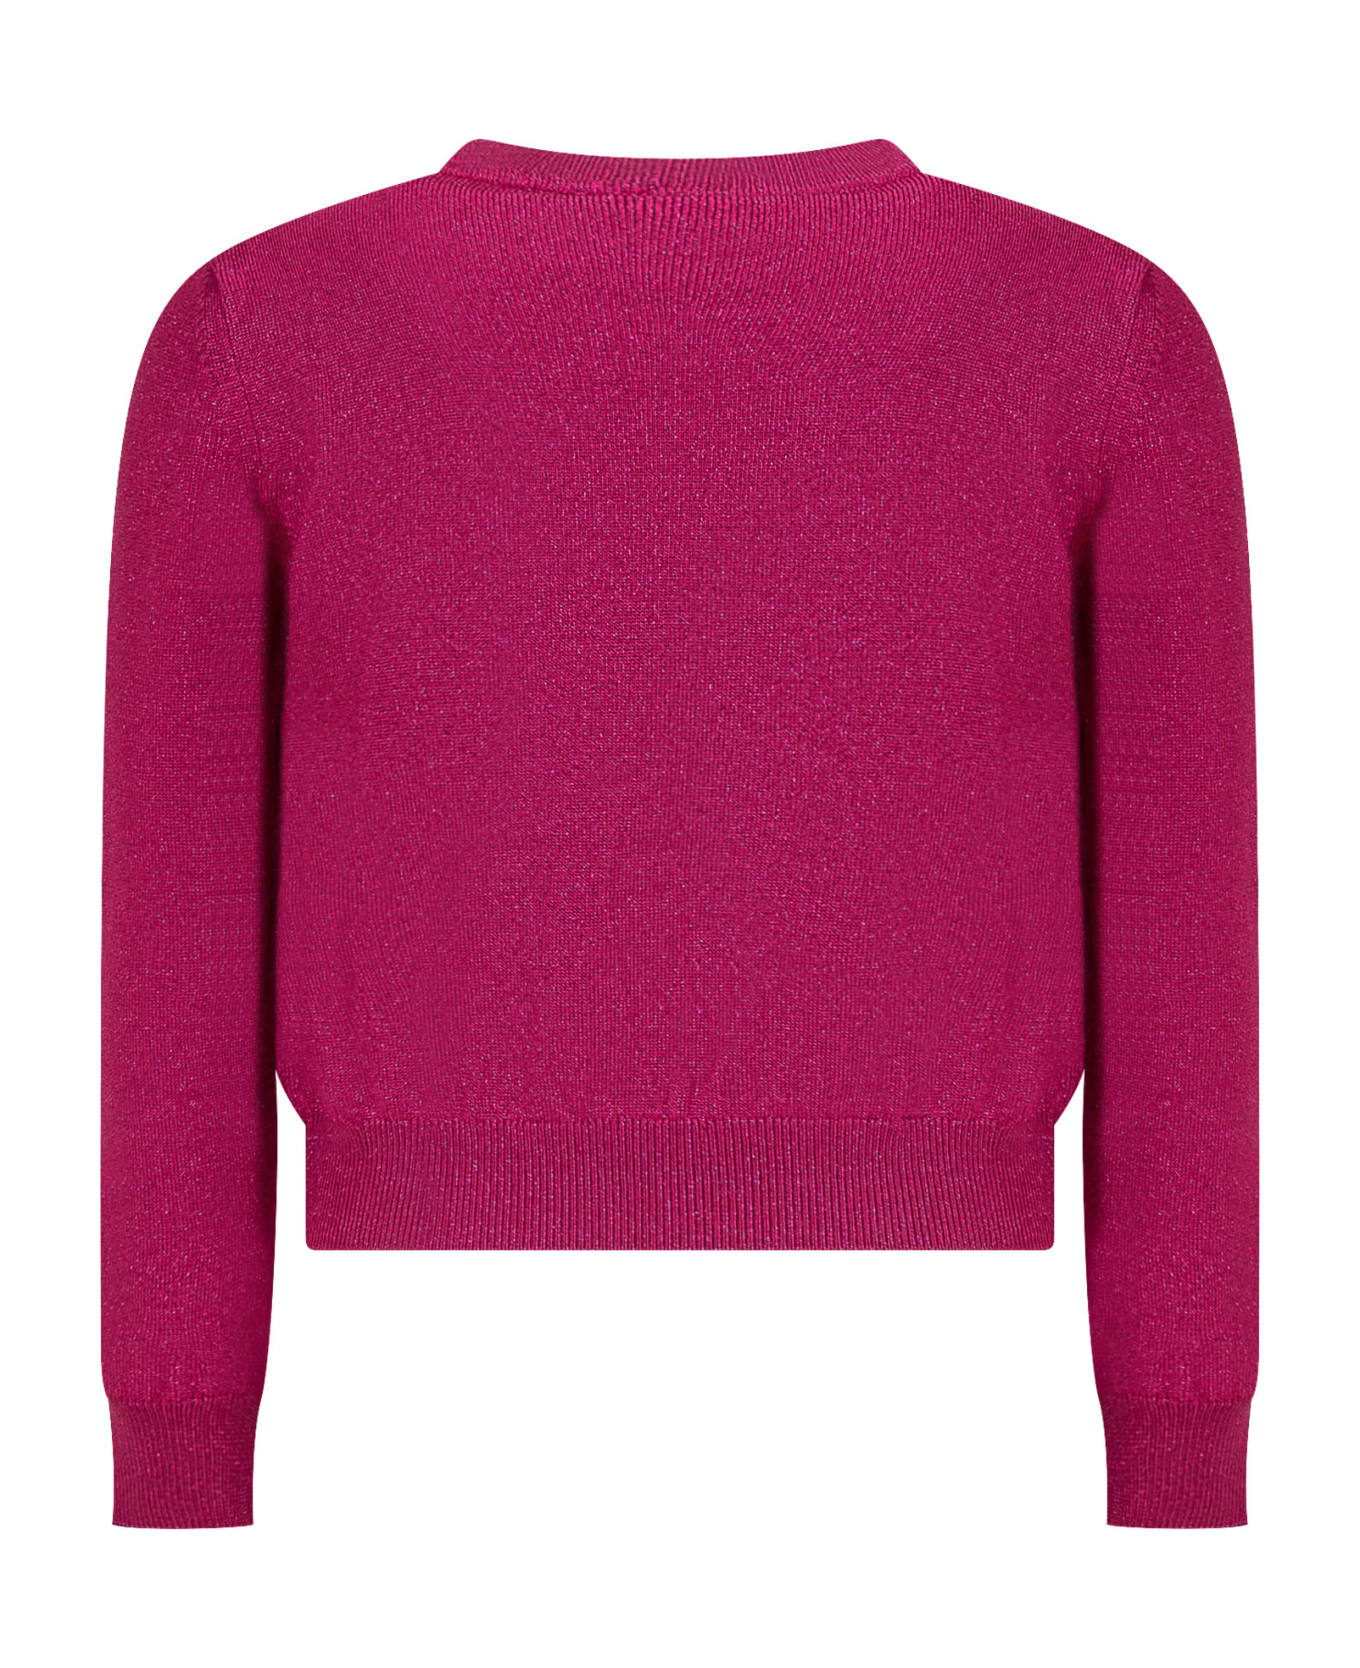 Versace Sweater With Logo - FUCHSIA LUREX